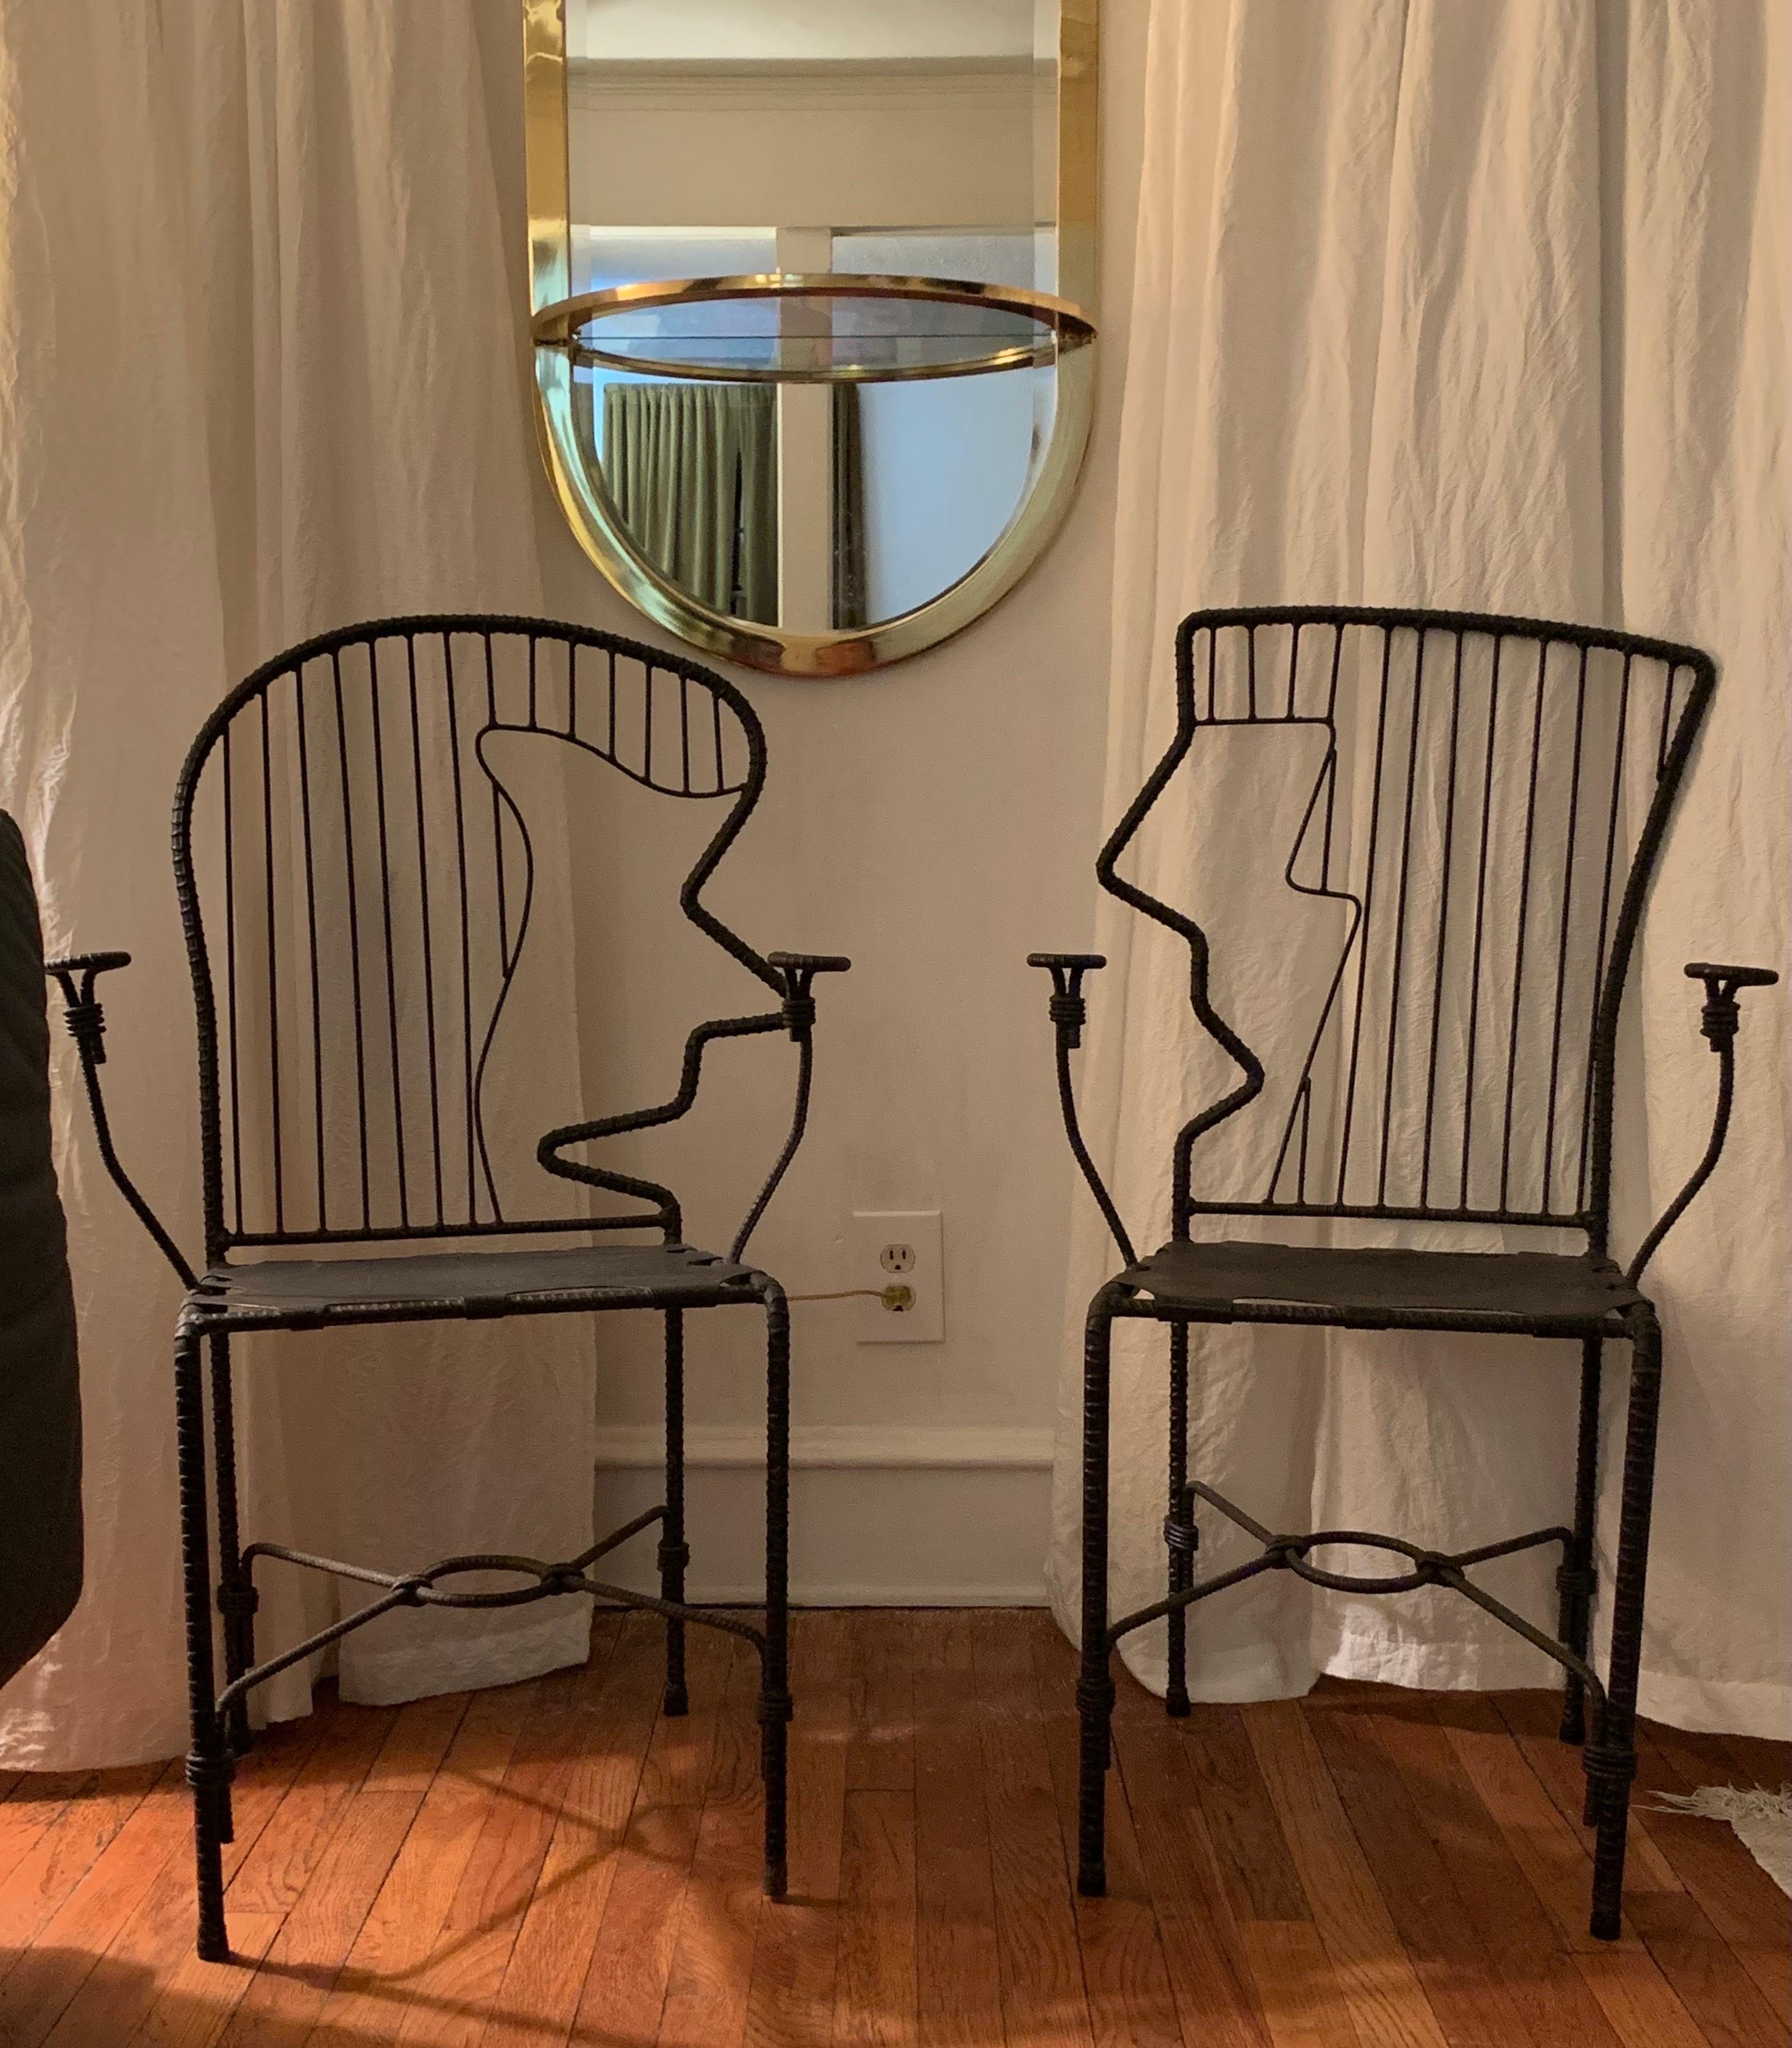 American Sculptural Iron Face Chairs by Industrial Artist Ries Niemi, 1990- a pair